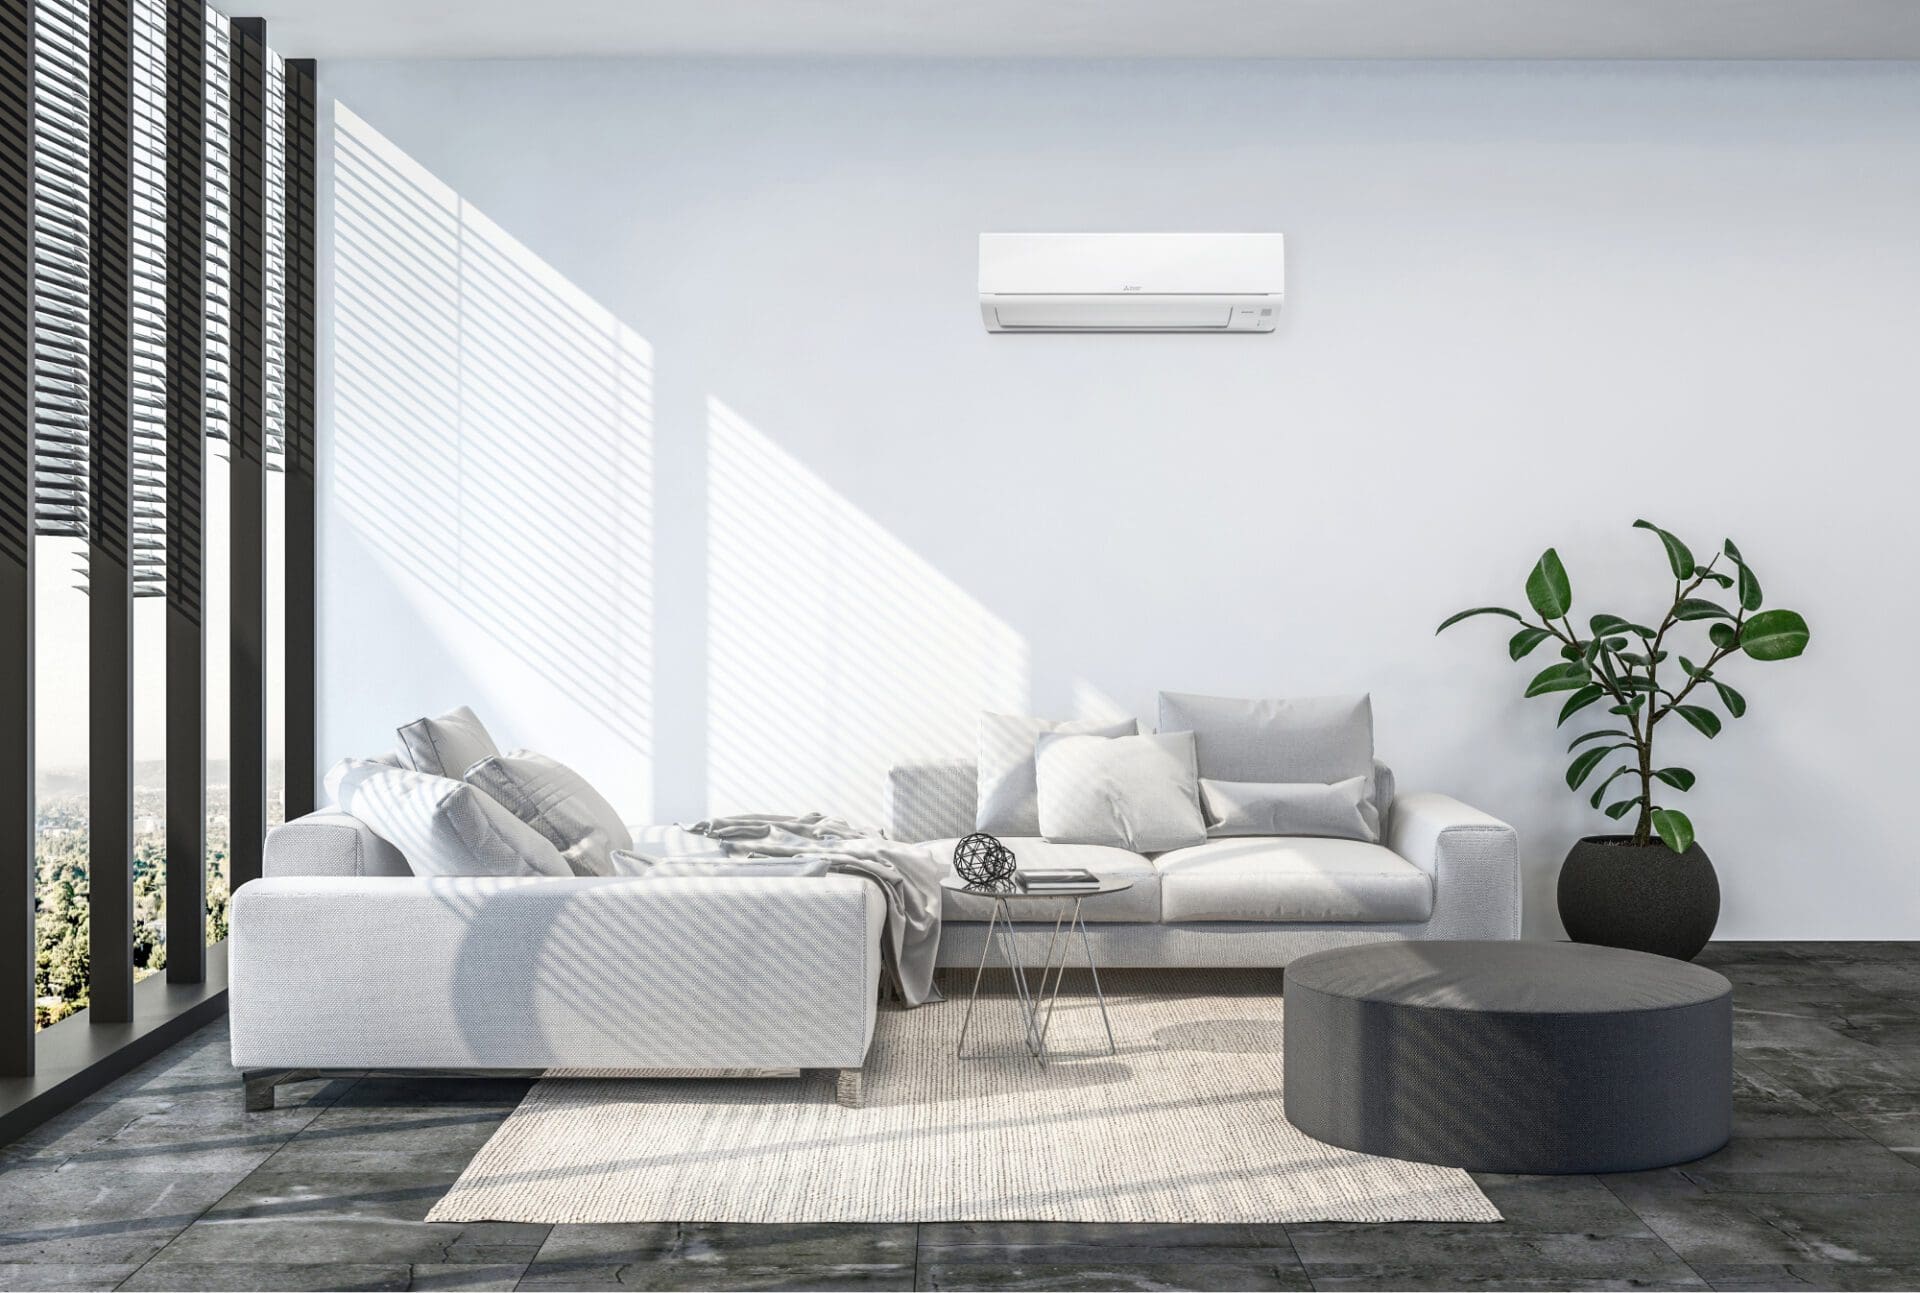 energy efficient heat pump in living room taupo